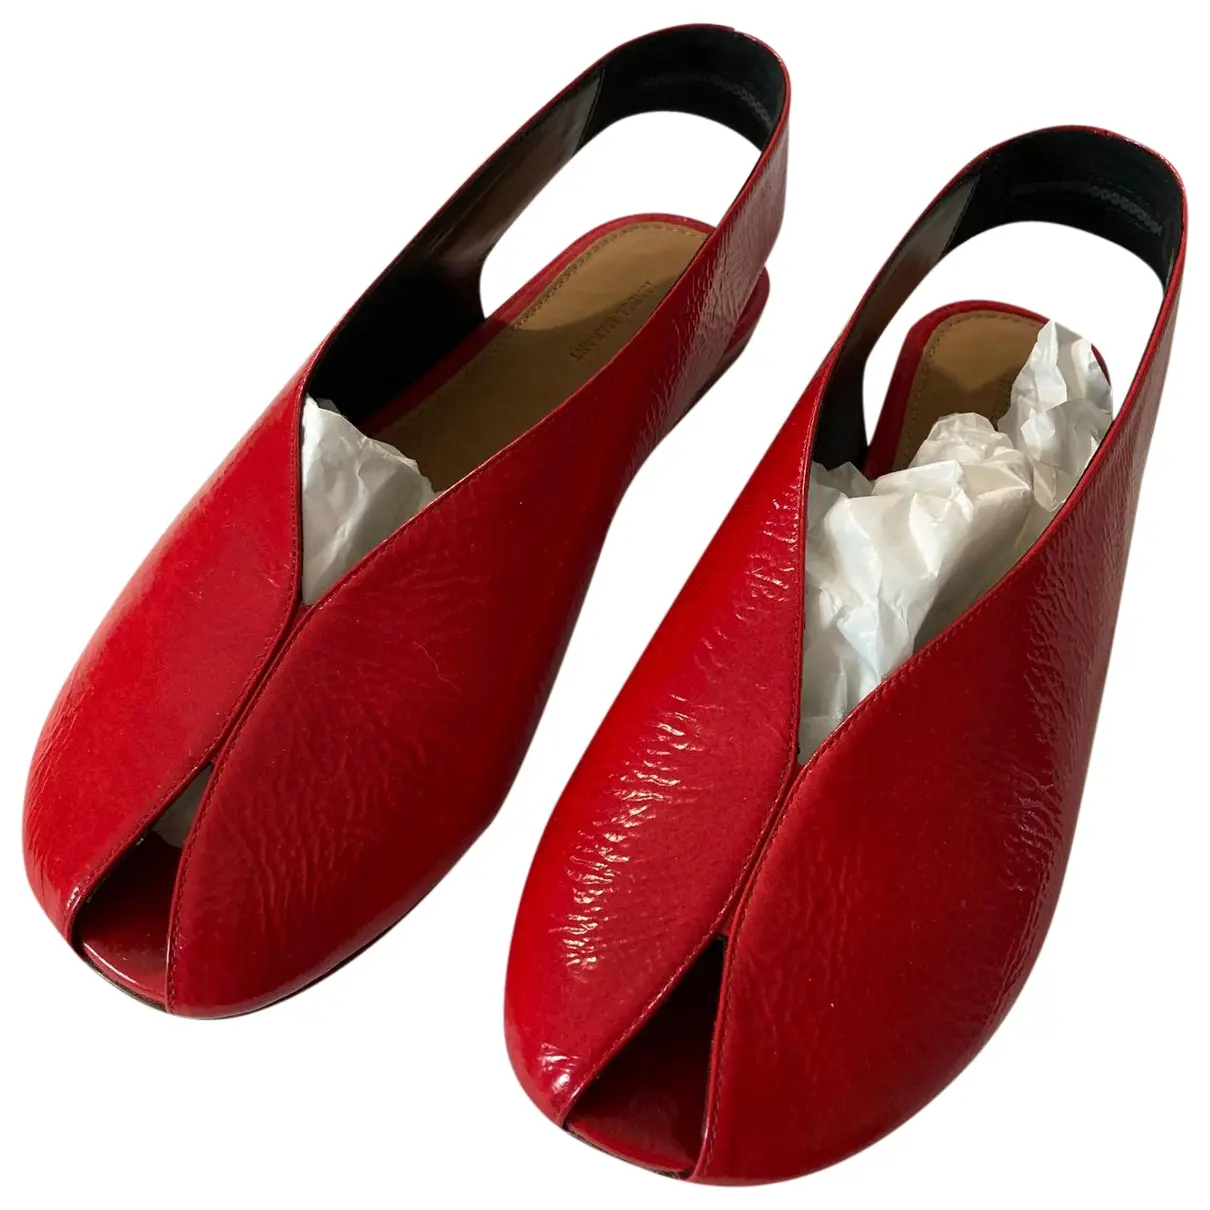 Patent leather sandals Isabel Marant